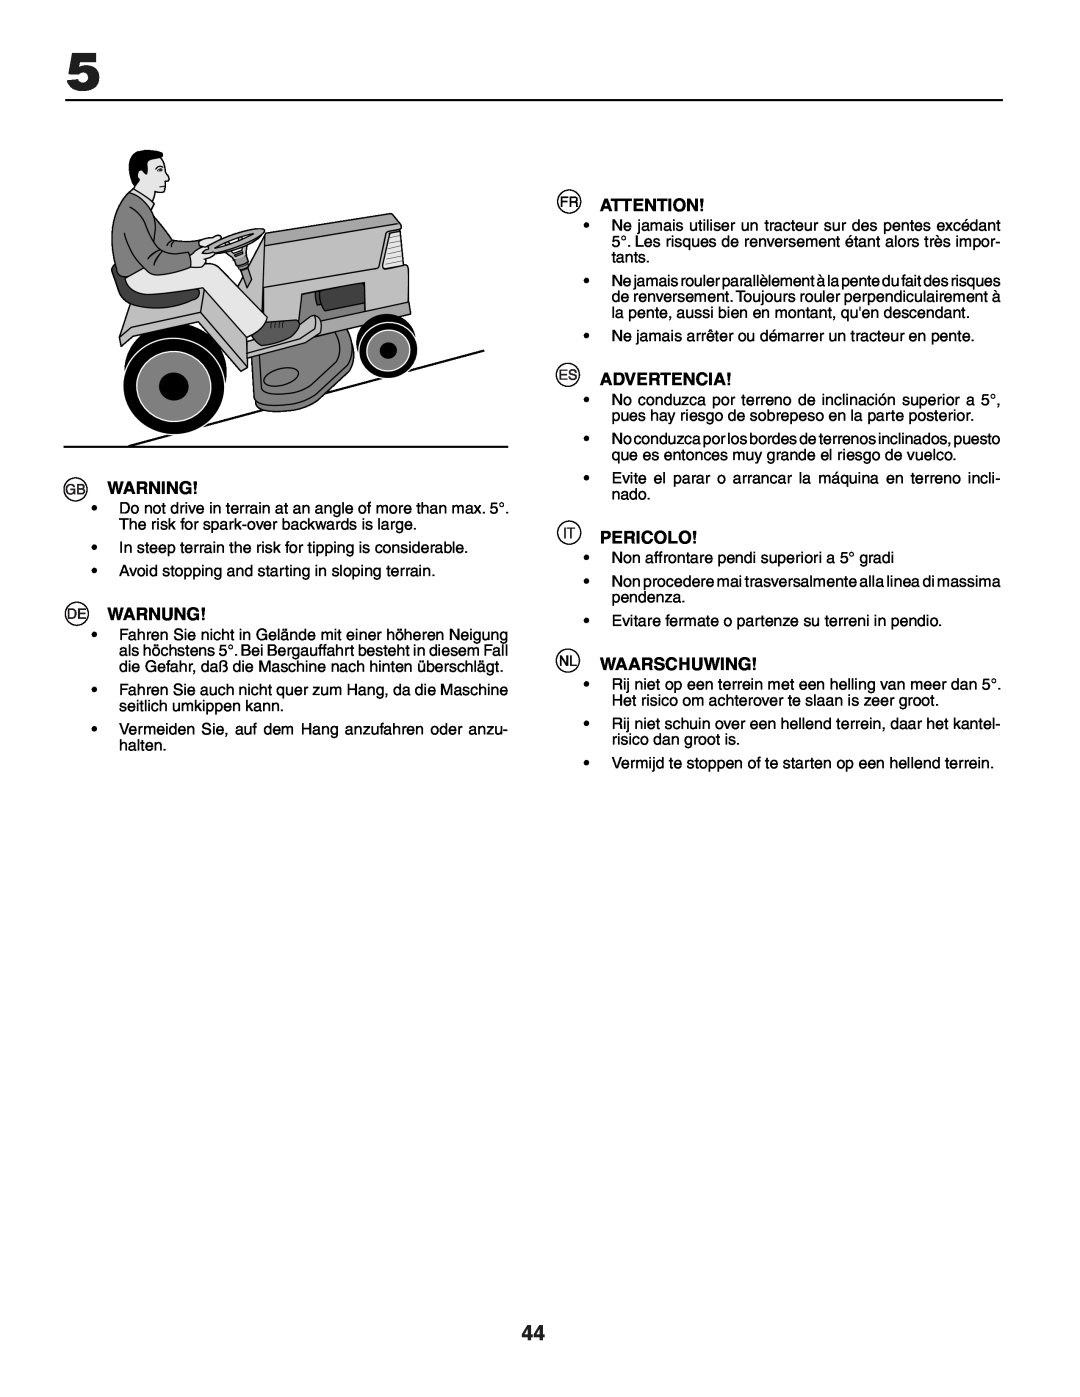 Husqvarna YTH151 instruction manual Warnung, Advertencia, Pericolo, Waarschuwing 